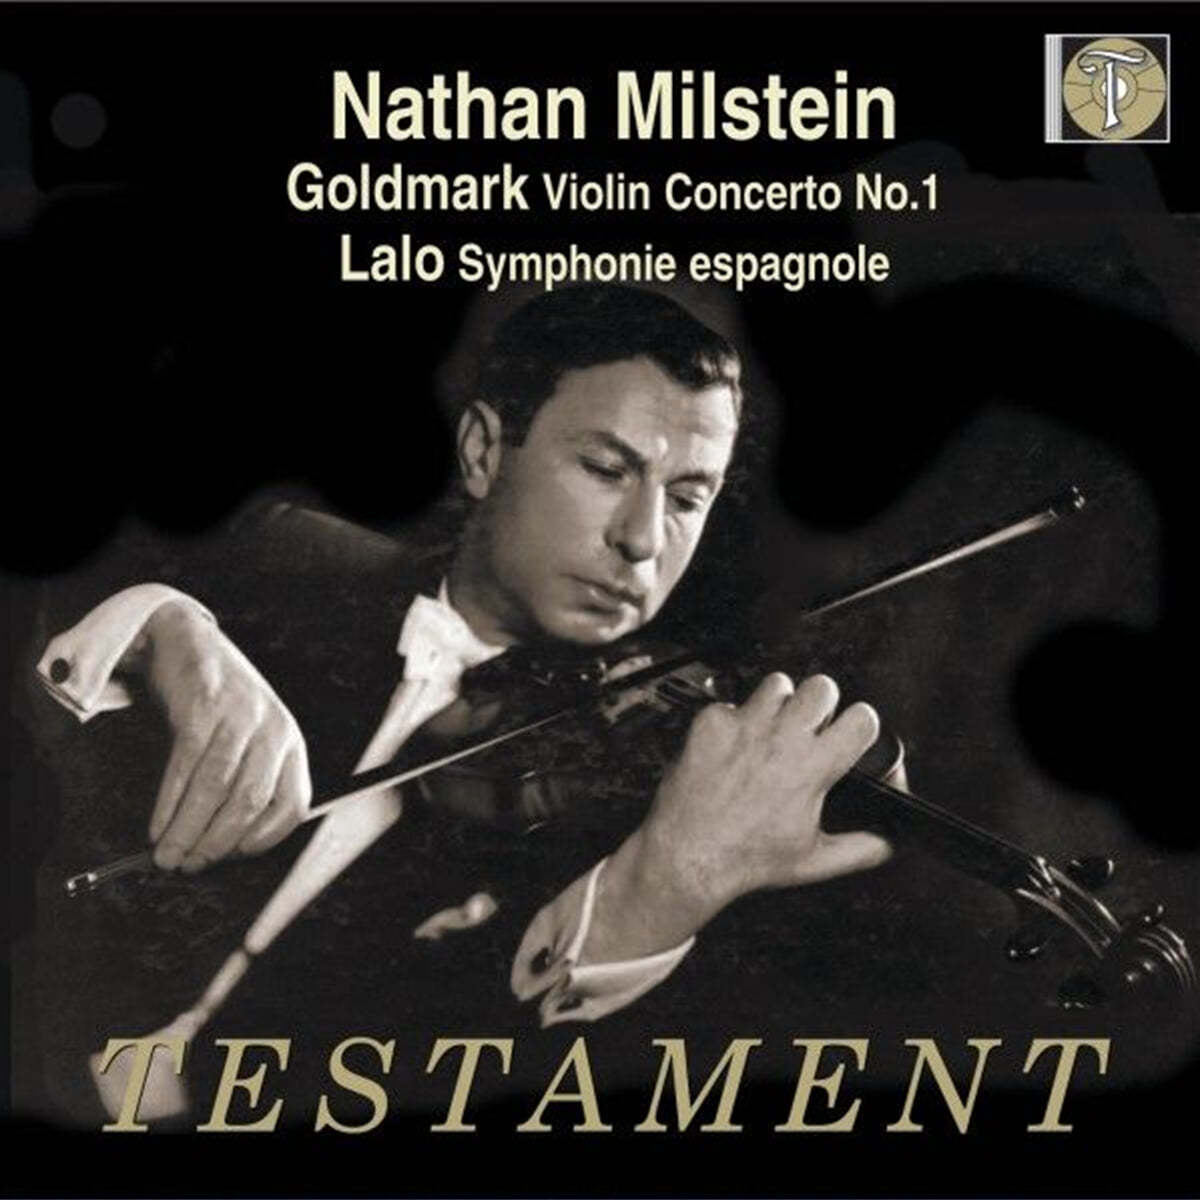 Nathan Milstein 골드마크: 바이올린 협주곡 1번 / 랄로: 스페인 교향곡 - 나단 밀스타인 (Goldmark: Violin Concerto Op.28 / Lalo: Symphonie espanole Op.21)